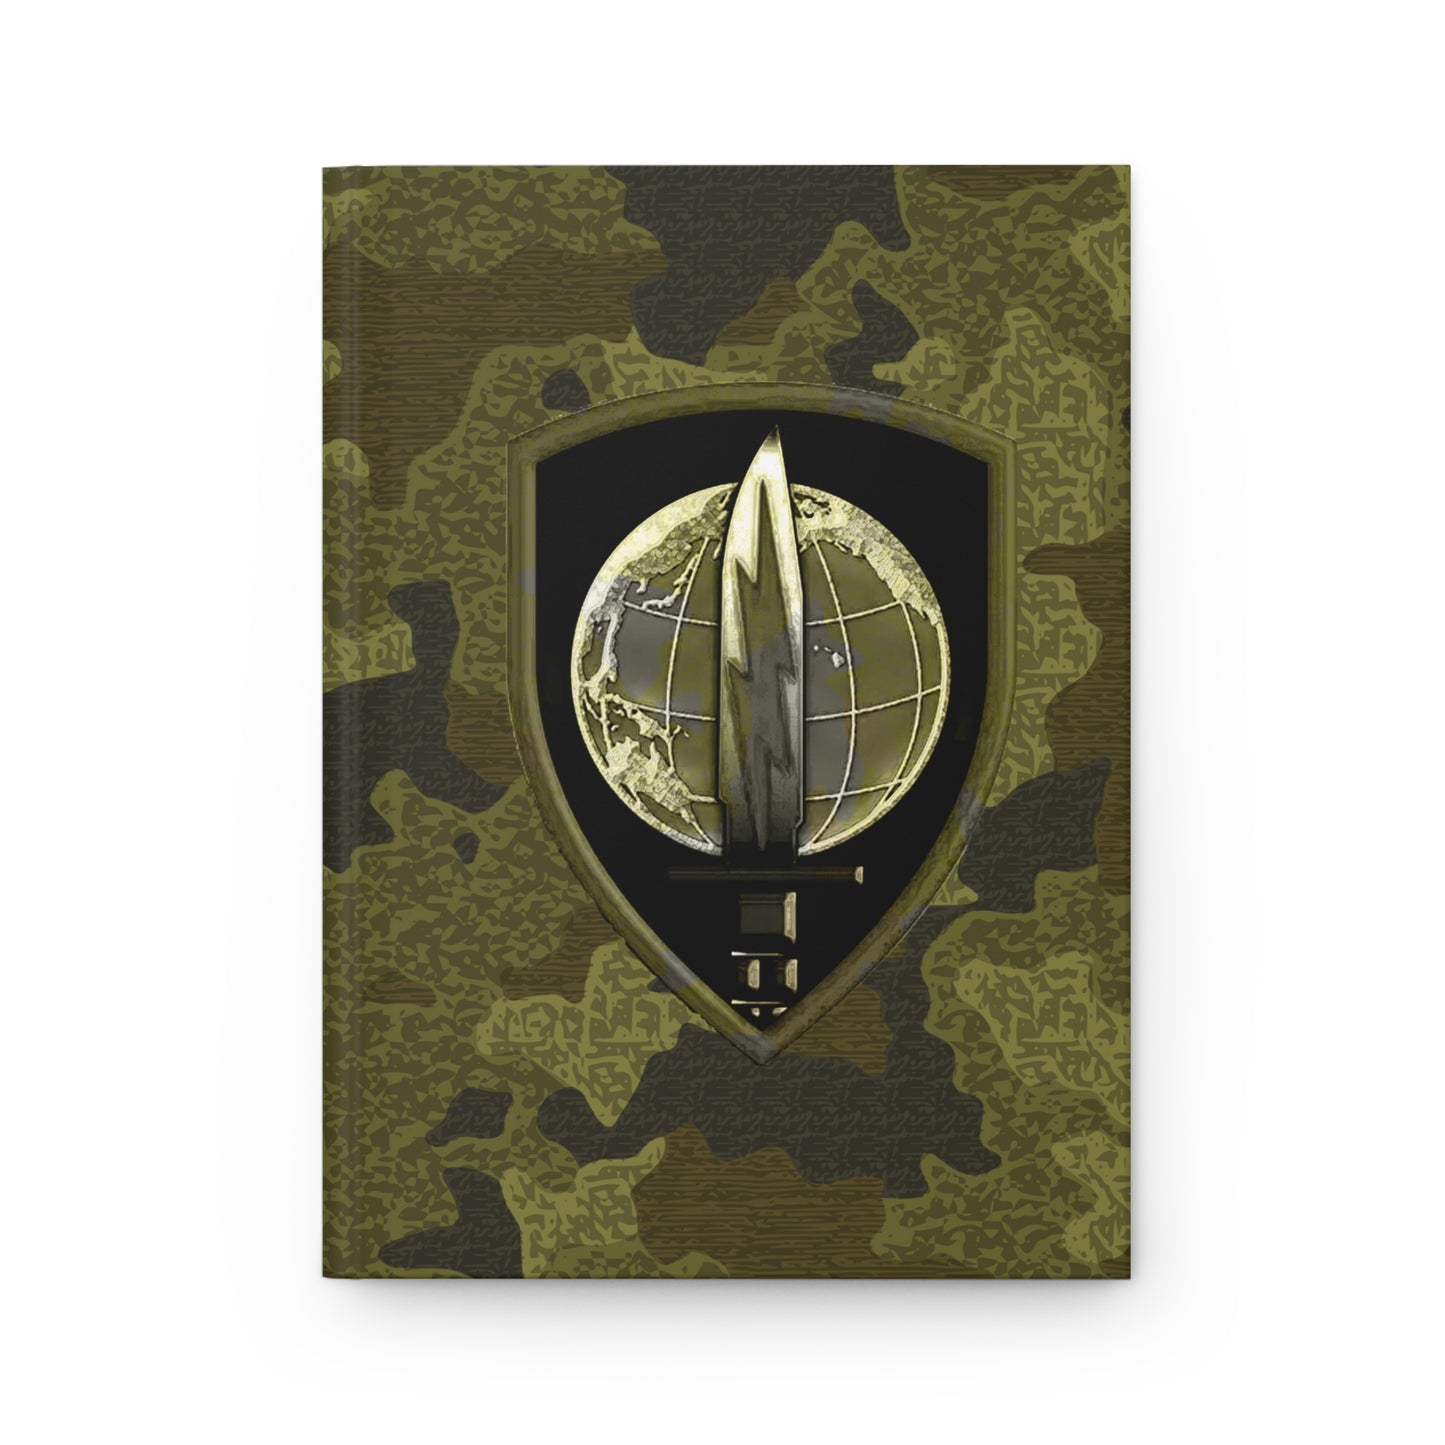 USINDOPACOM Army Element Camo Green Hardcover Leader Book